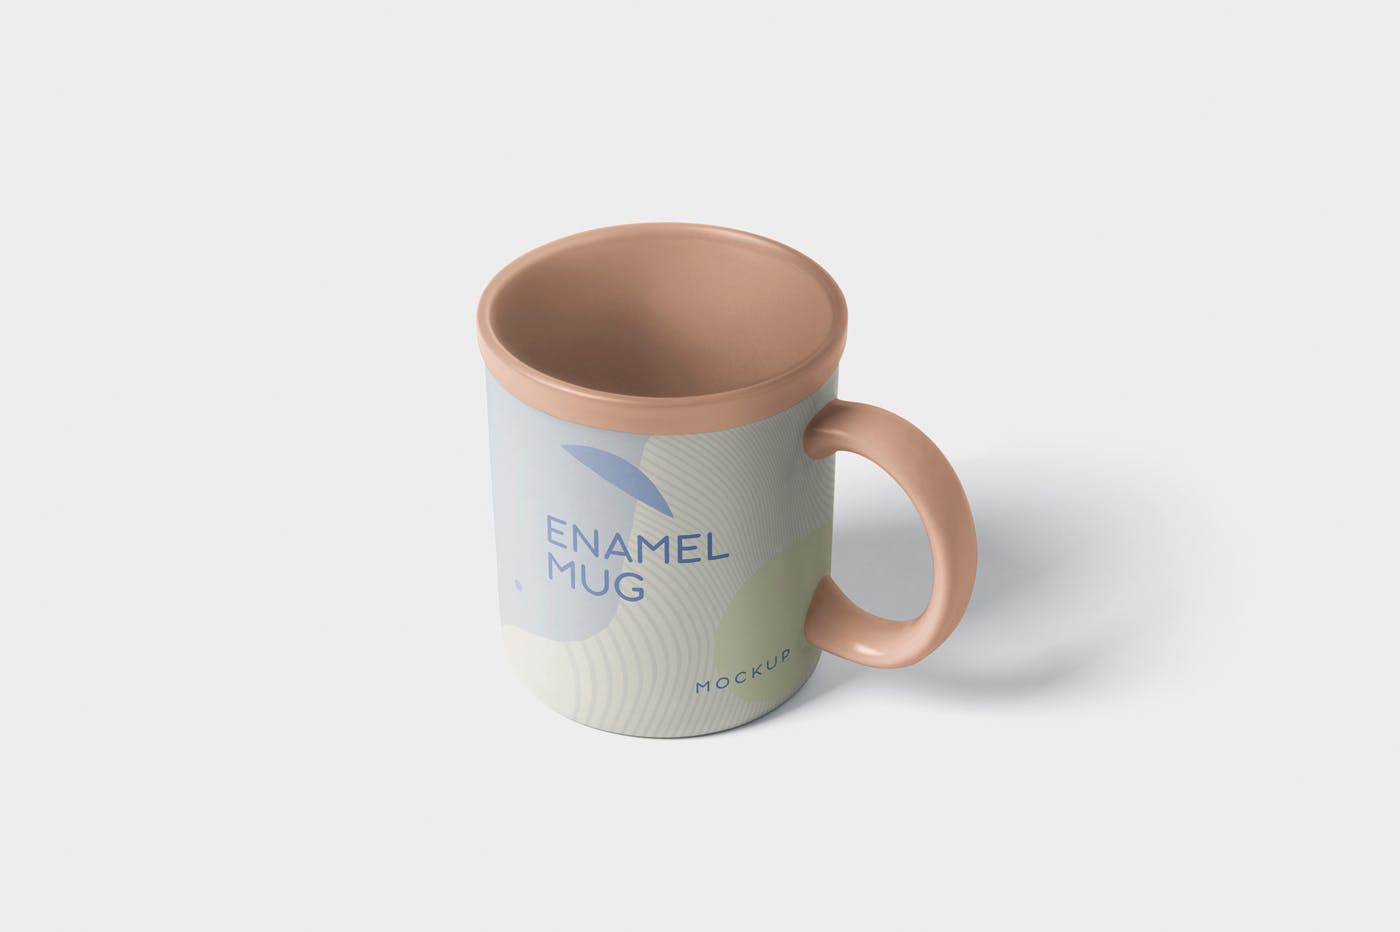 带把手圆形搪瓷杯马克杯图案设计第一素材精选 Round Enamel Mug Mockup With Handle插图(2)